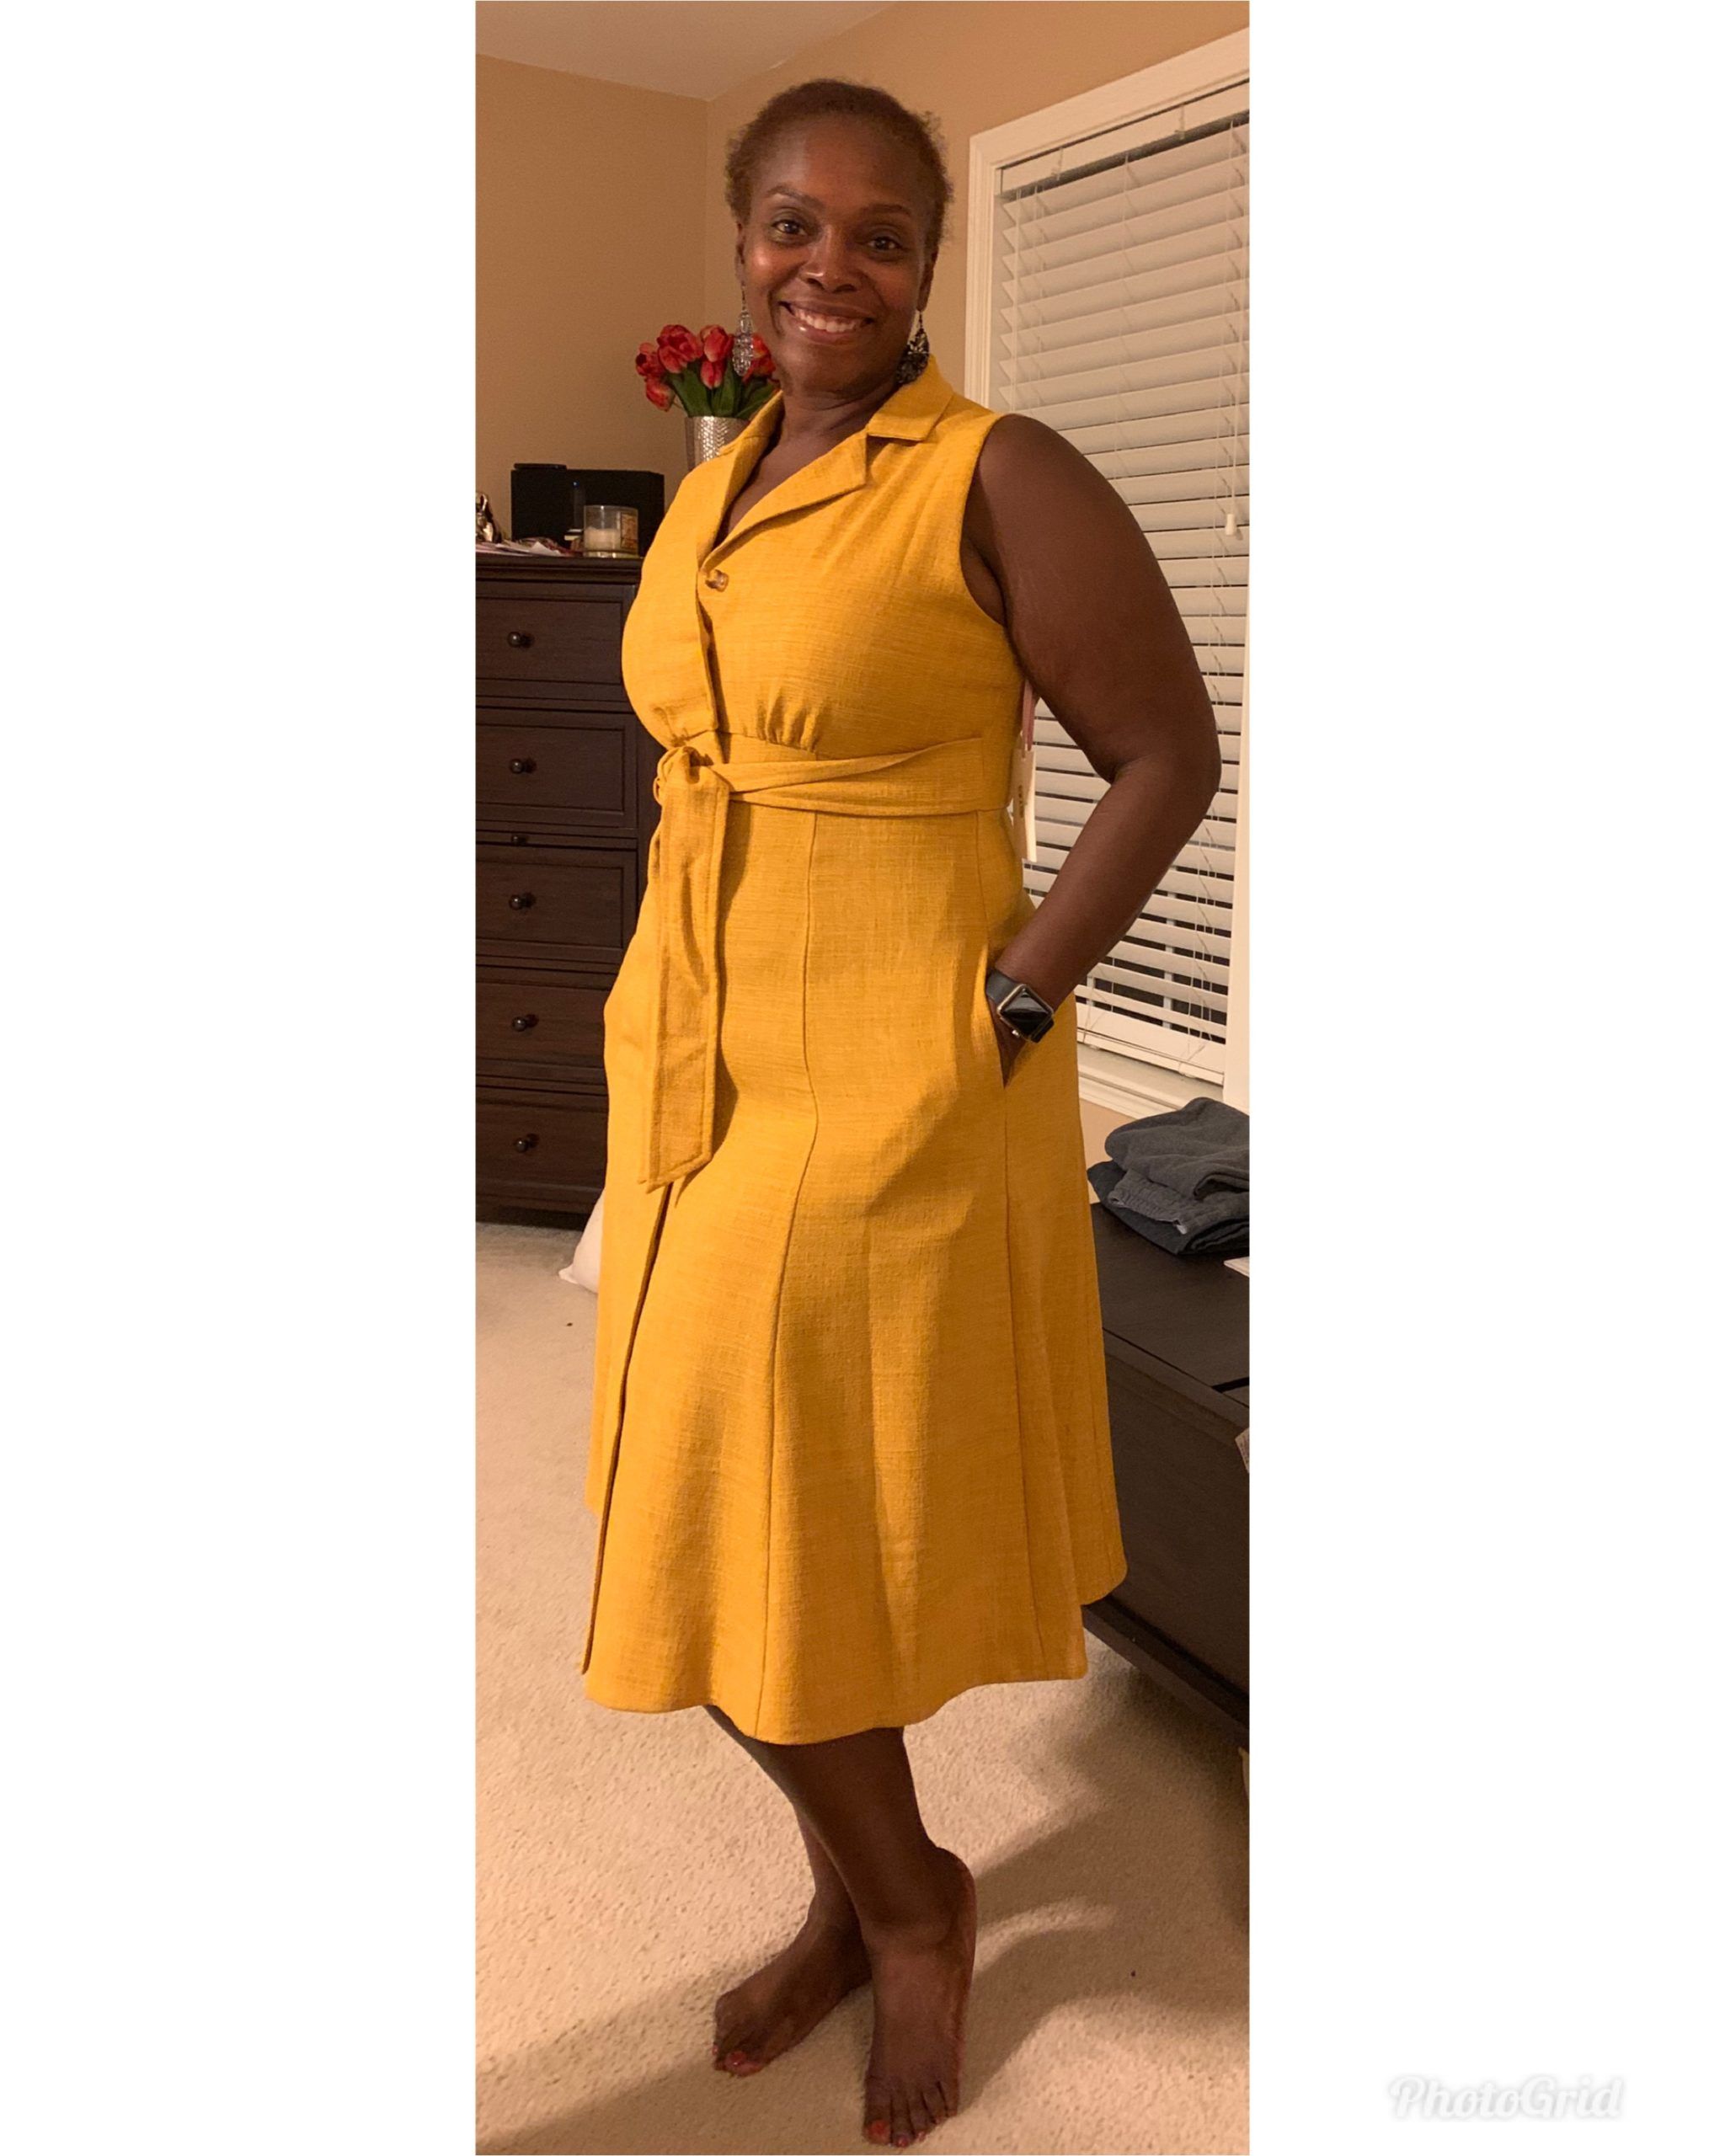 Jakelia Sledge in a yellow dress smiling